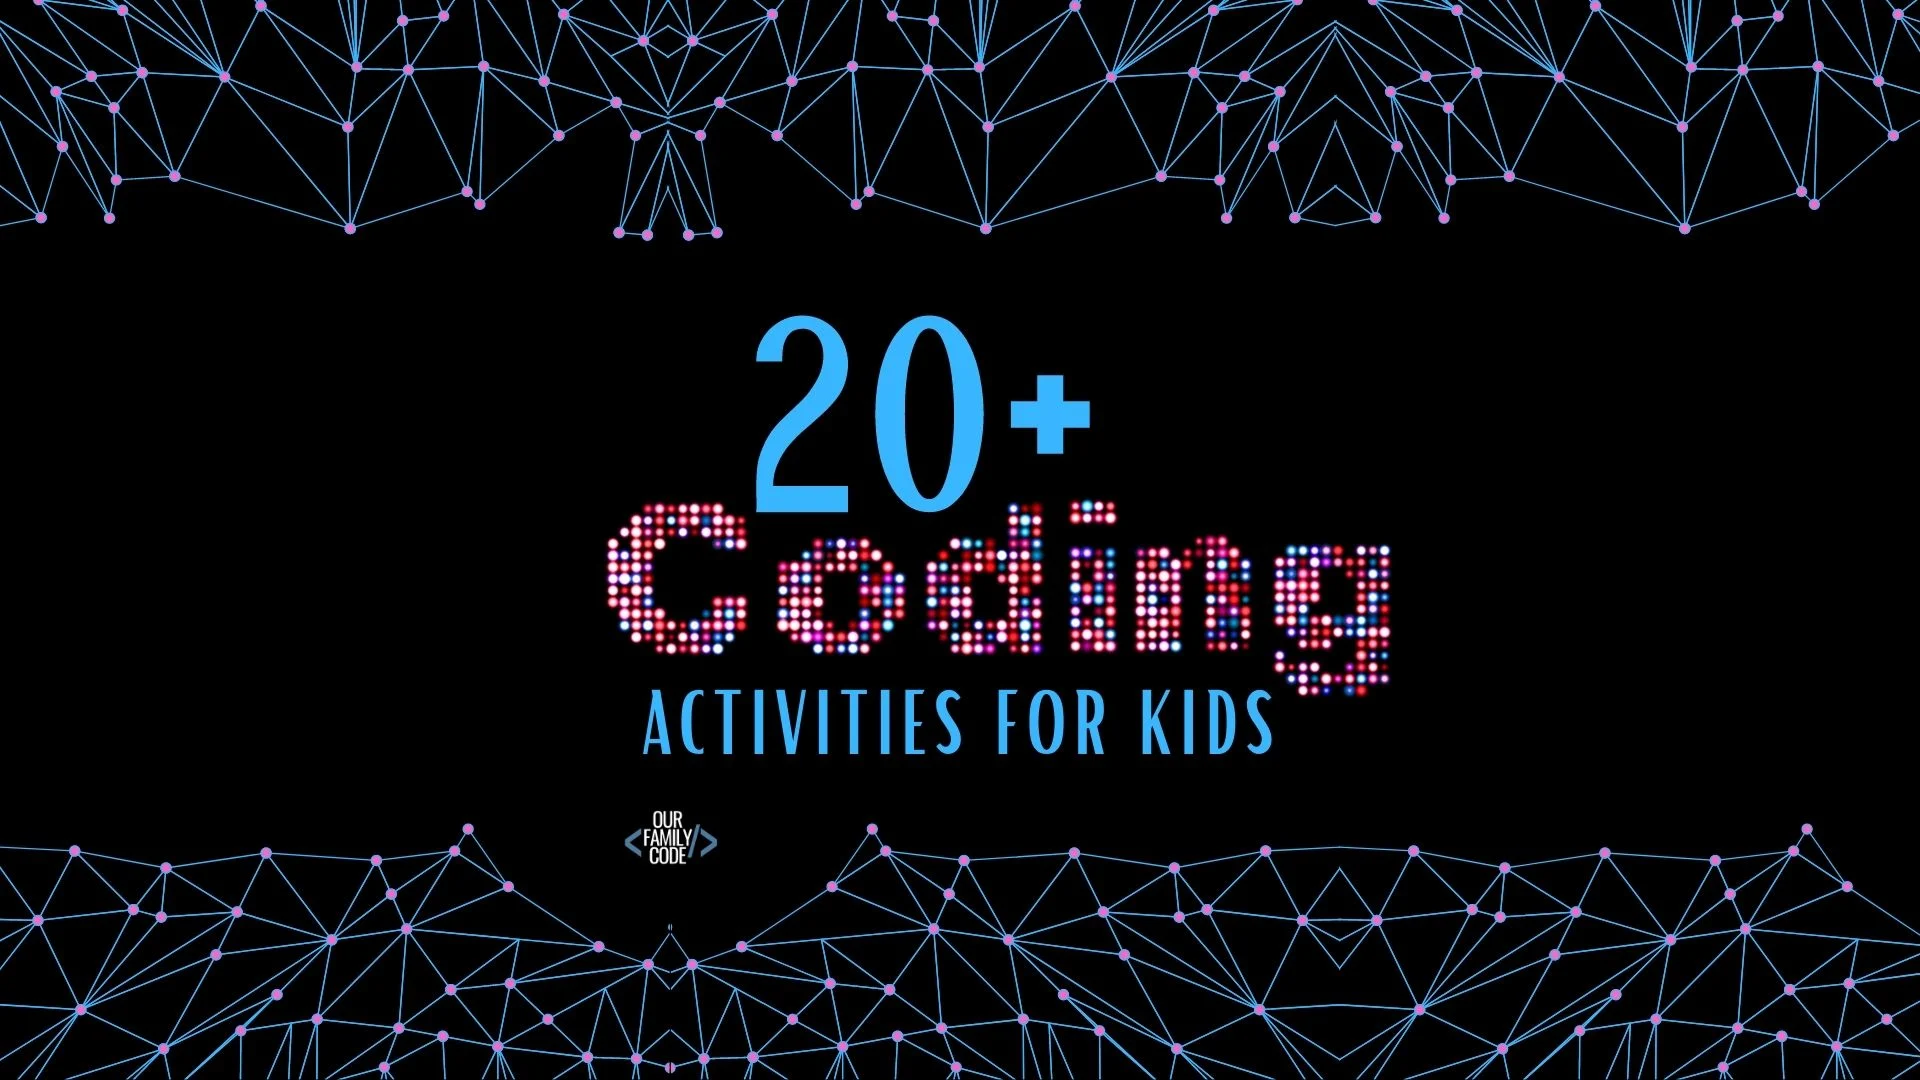 coding activities for kids